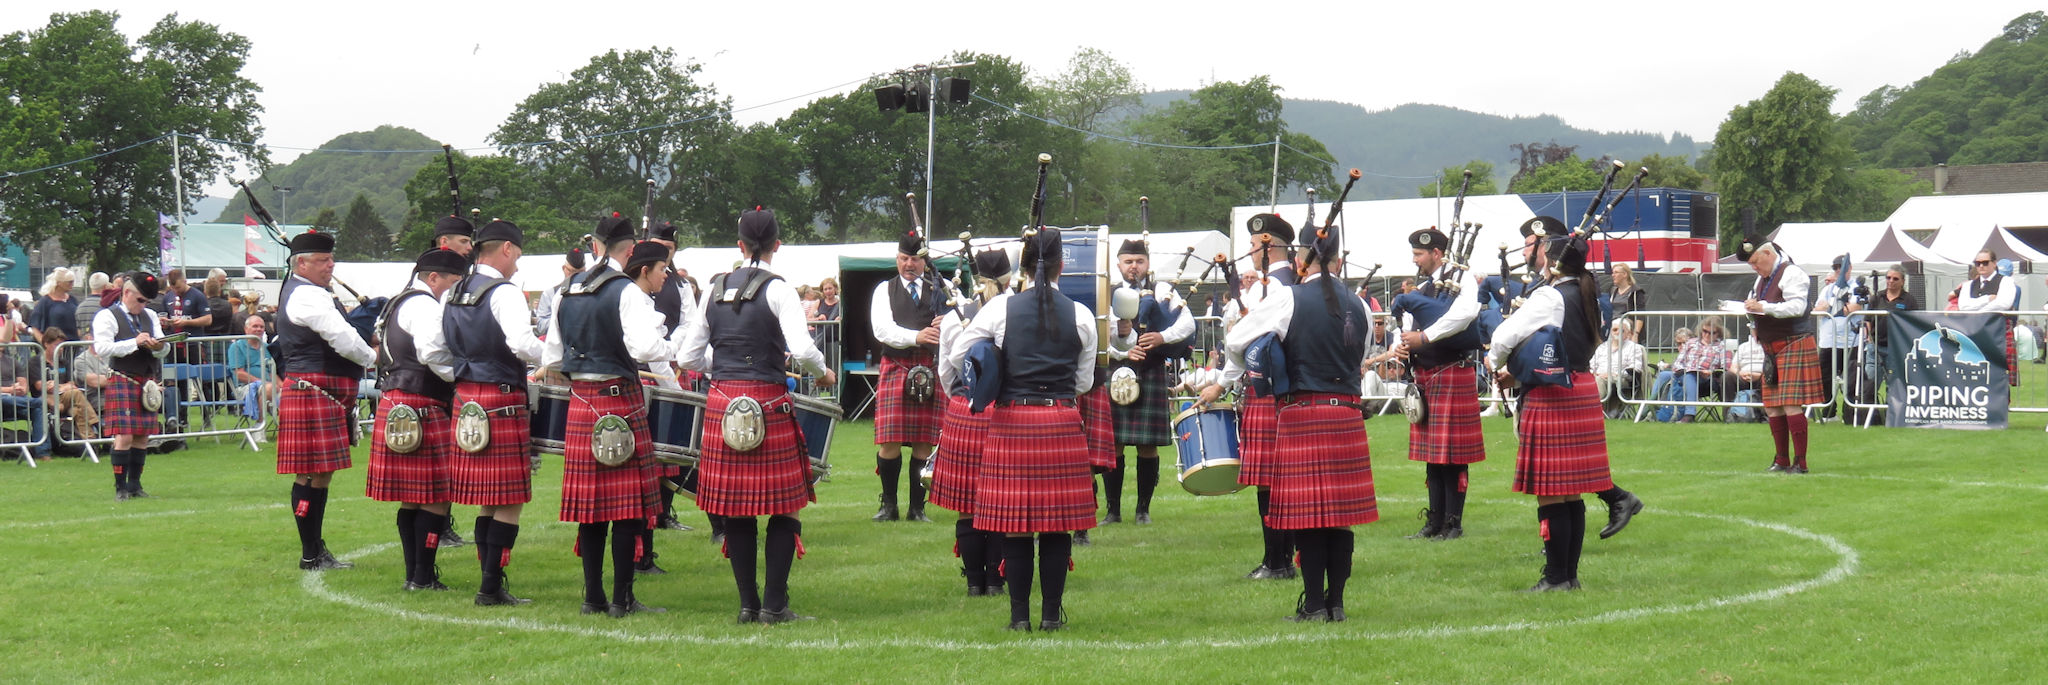 Pipe band, Inverness, Scotland